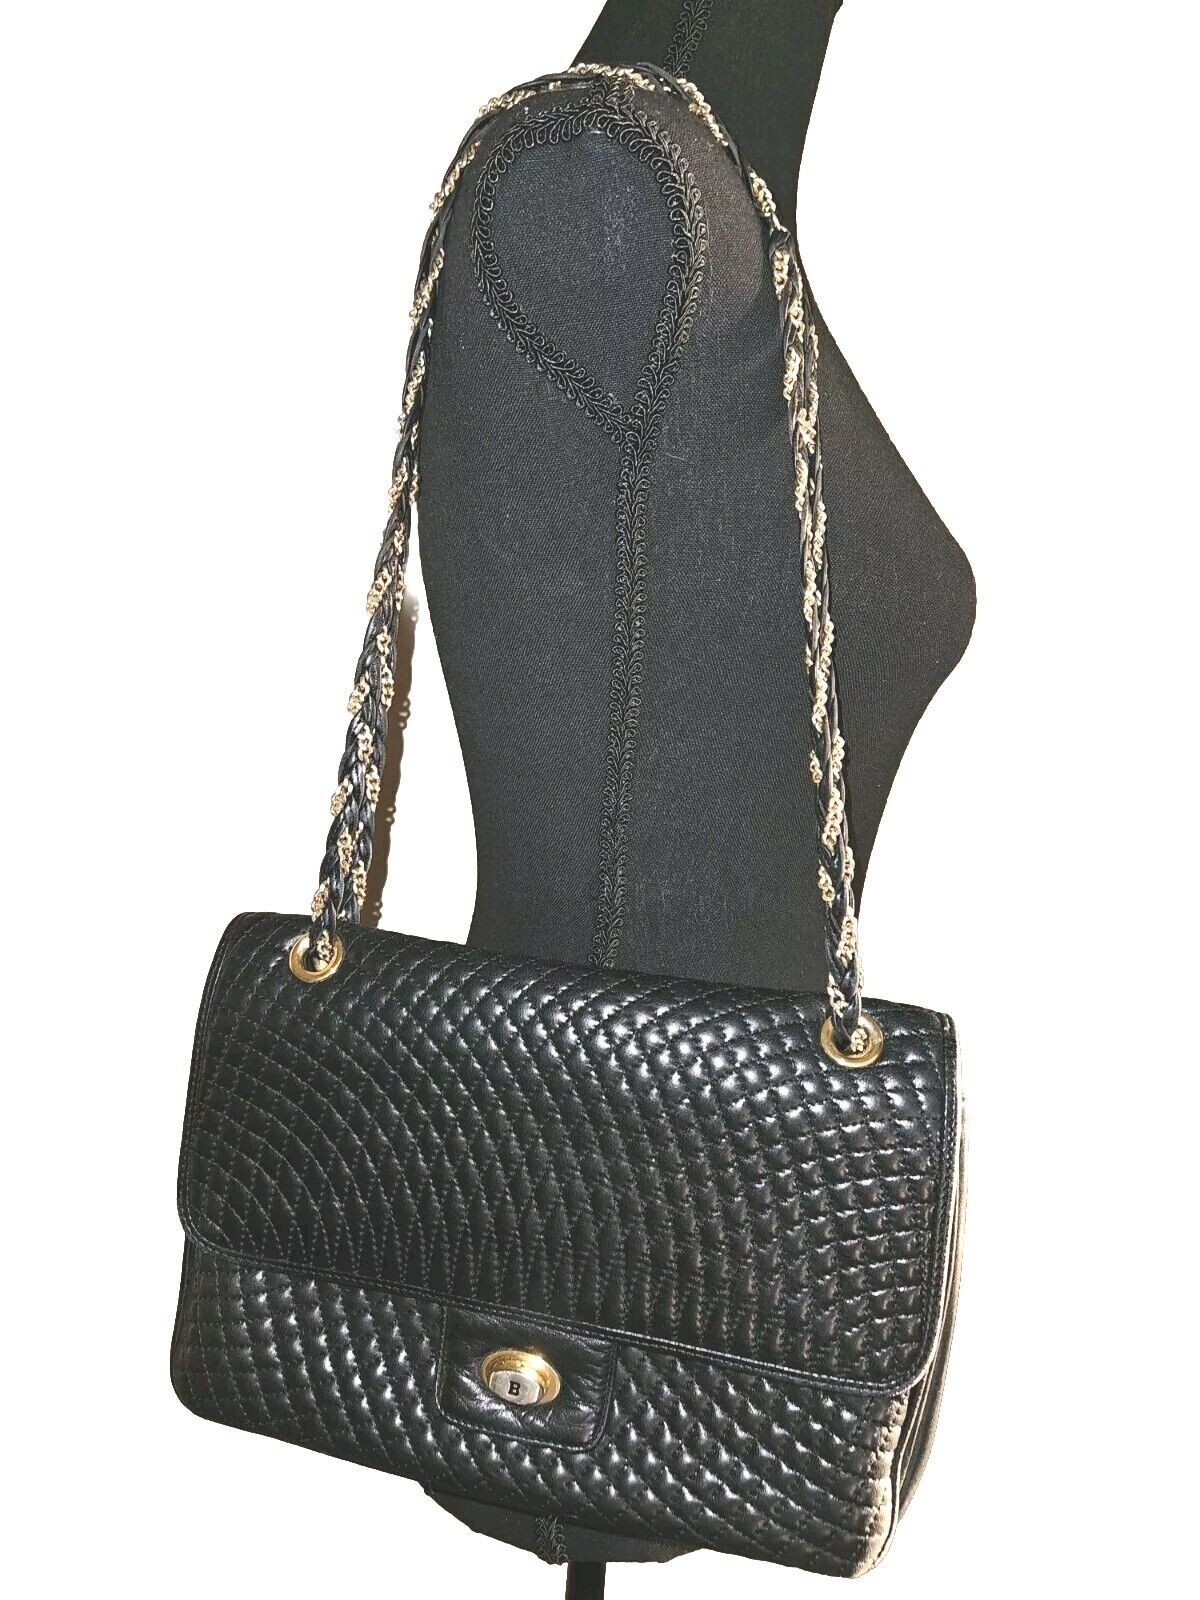 BALLY Chain Shoulder Bag Quilted Leather Blk Turn lock Vintage Read Description